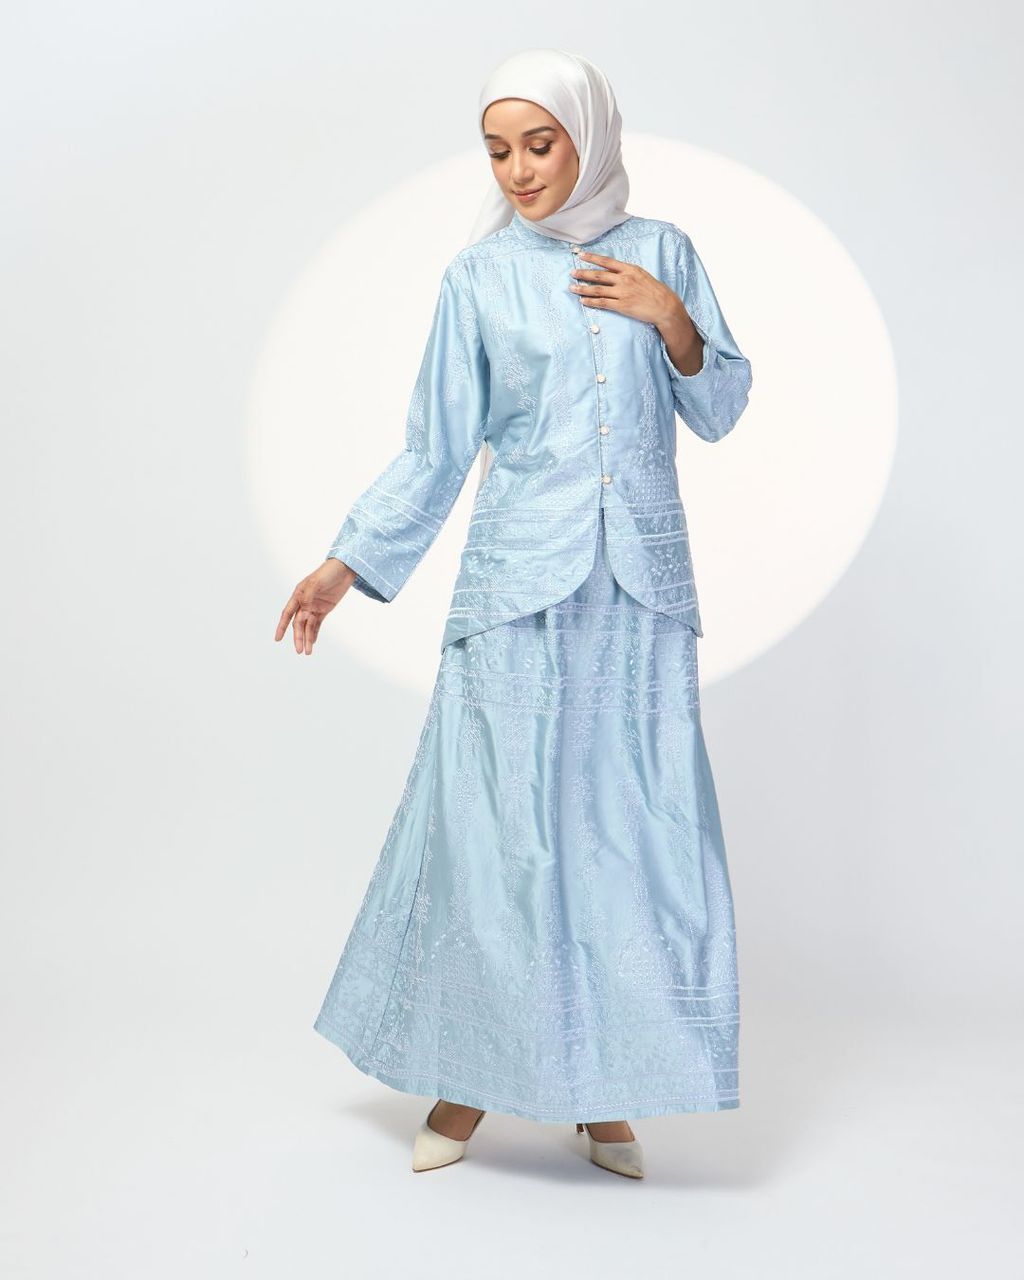 haura-wear-mikayla-skirt-set-sulam-embroidery-pario-klasik-tradisional-mini kebaya-fabrik eyelet-raya-muslimah-long-sleeve-baju-skirt-kain-perempuan-baju-sepasang (3)